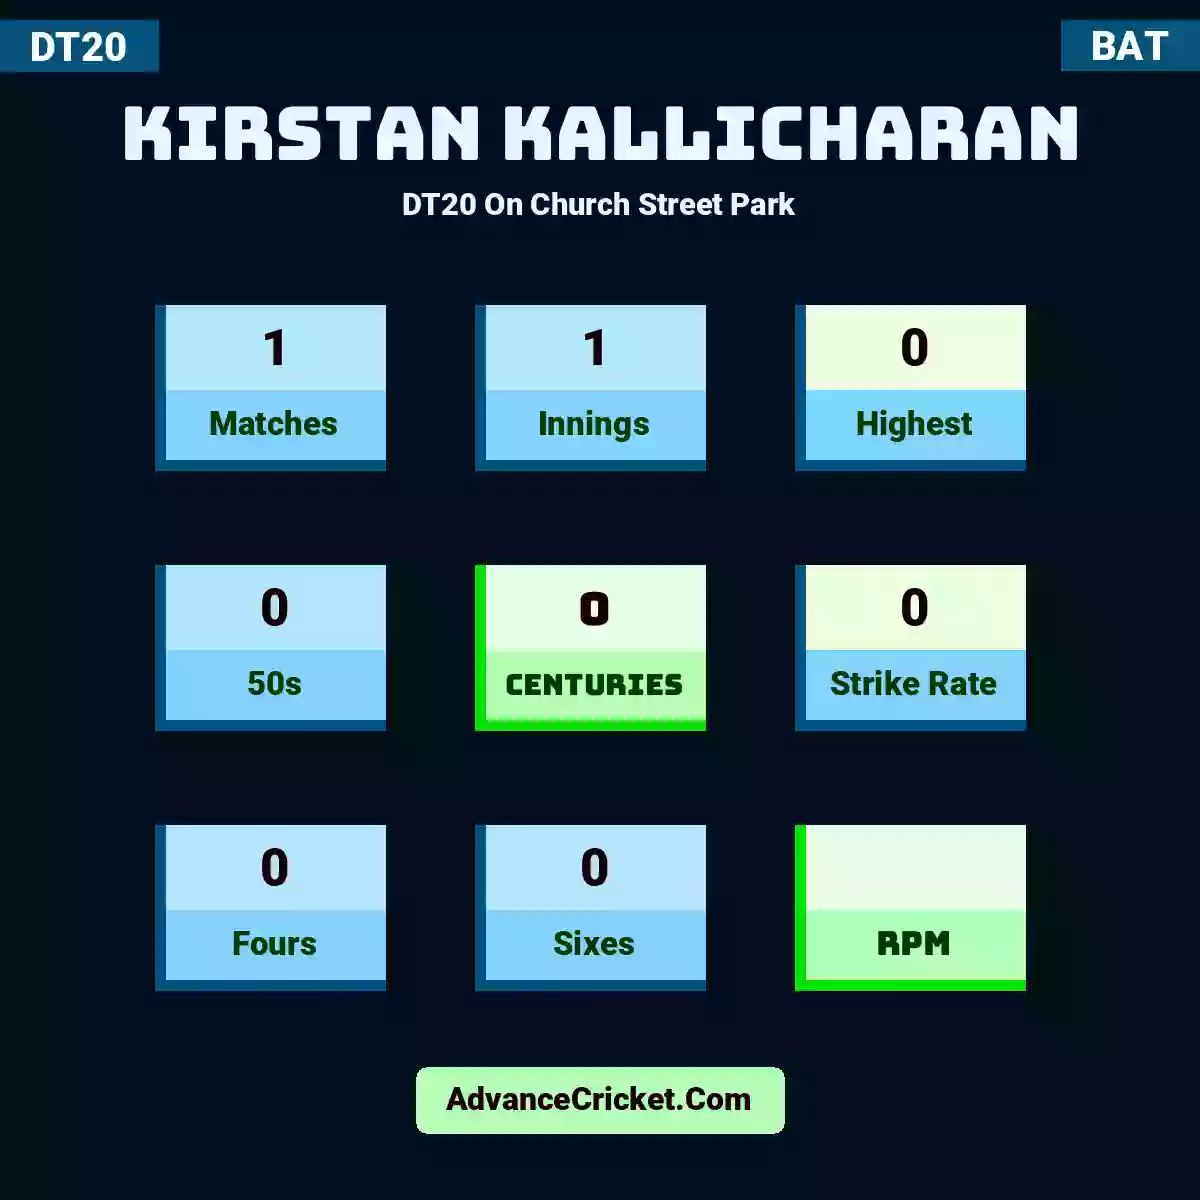 Kirstan Kallicharan DT20  On Church Street Park, Kirstan Kallicharan played 1 matches, scored 0 runs as highest, 0 half-centuries, and 0 centuries, with a strike rate of 0. K.Kallicharan hit 0 fours and 0 sixes.